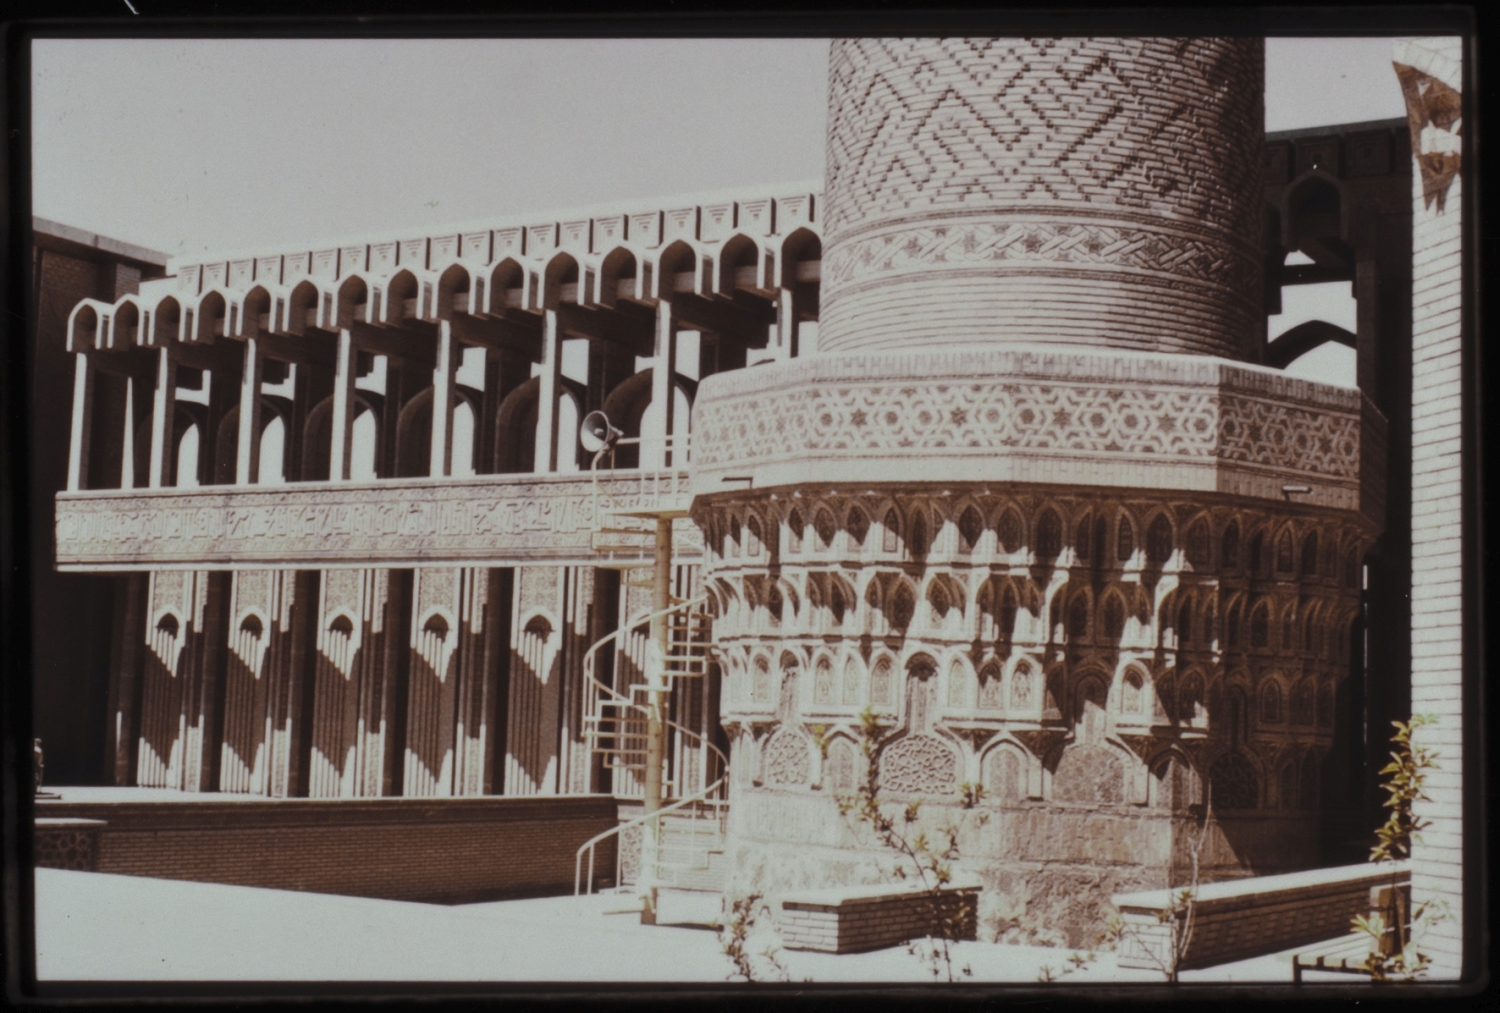 Courtyard, detail of base of minaret; with riwaq